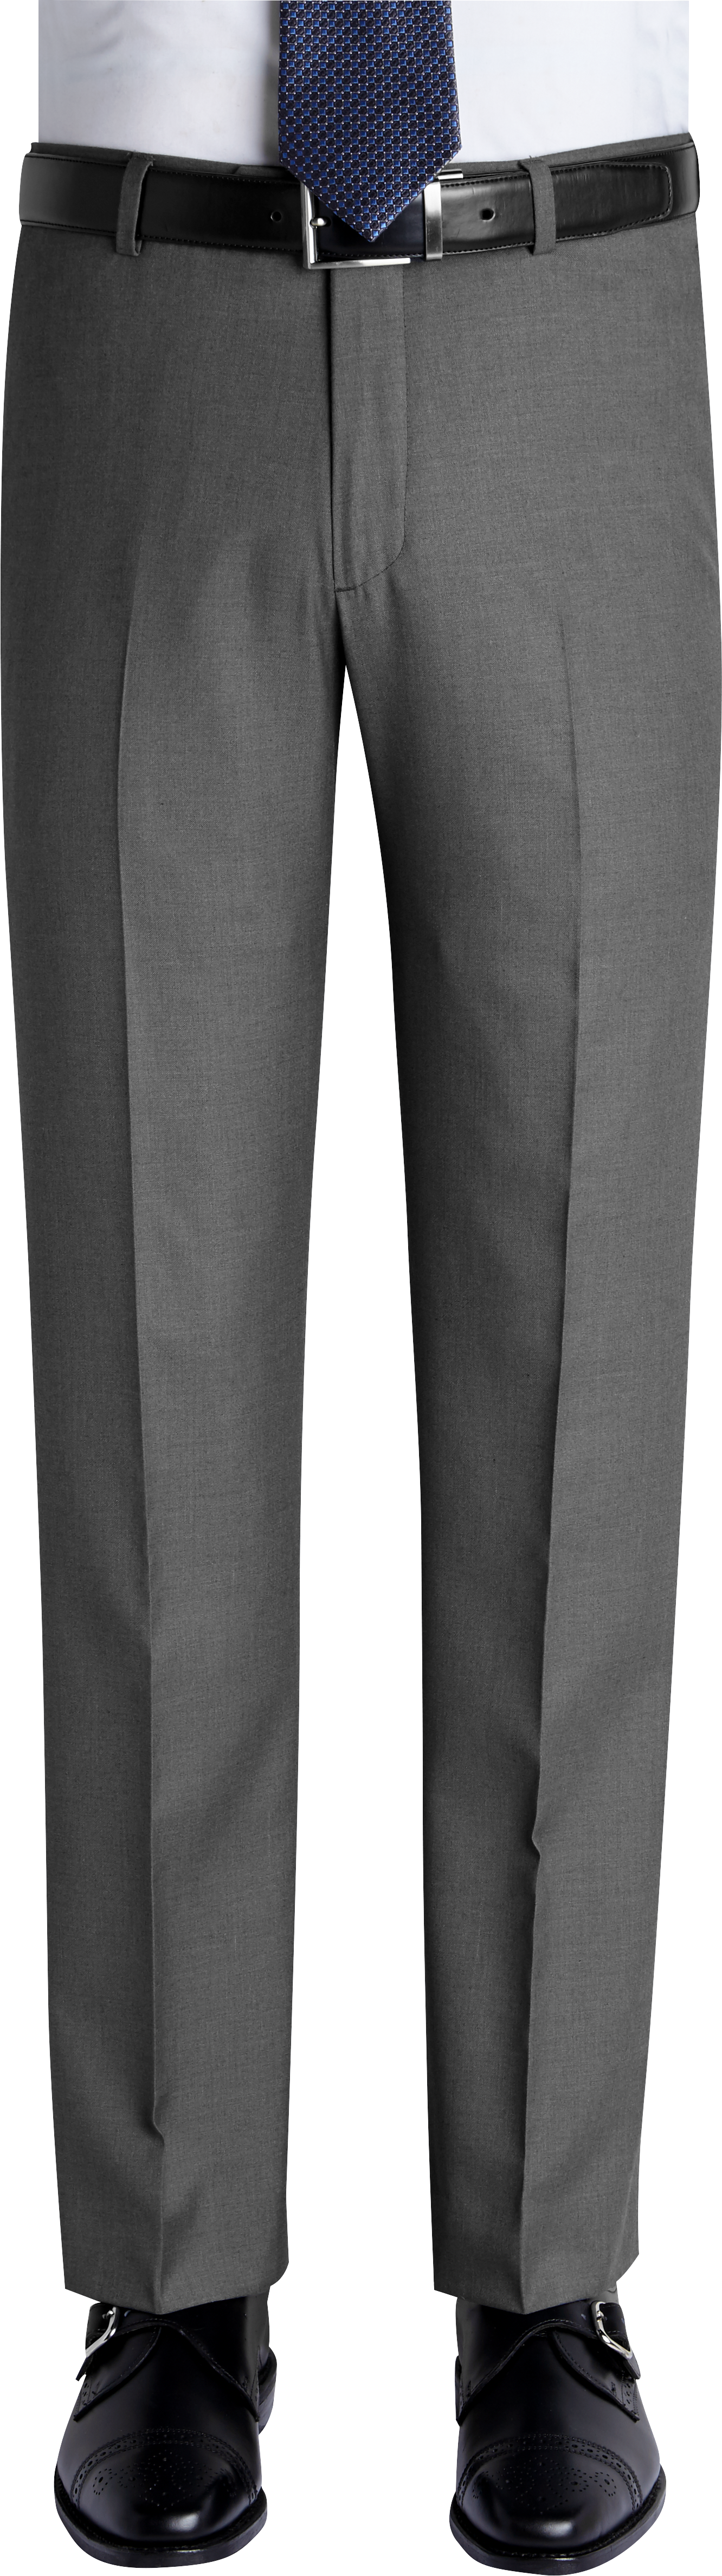 Pronto Uomo Gray Slim Fit Dress Pants - Men's Sale | Men's Wearhouse